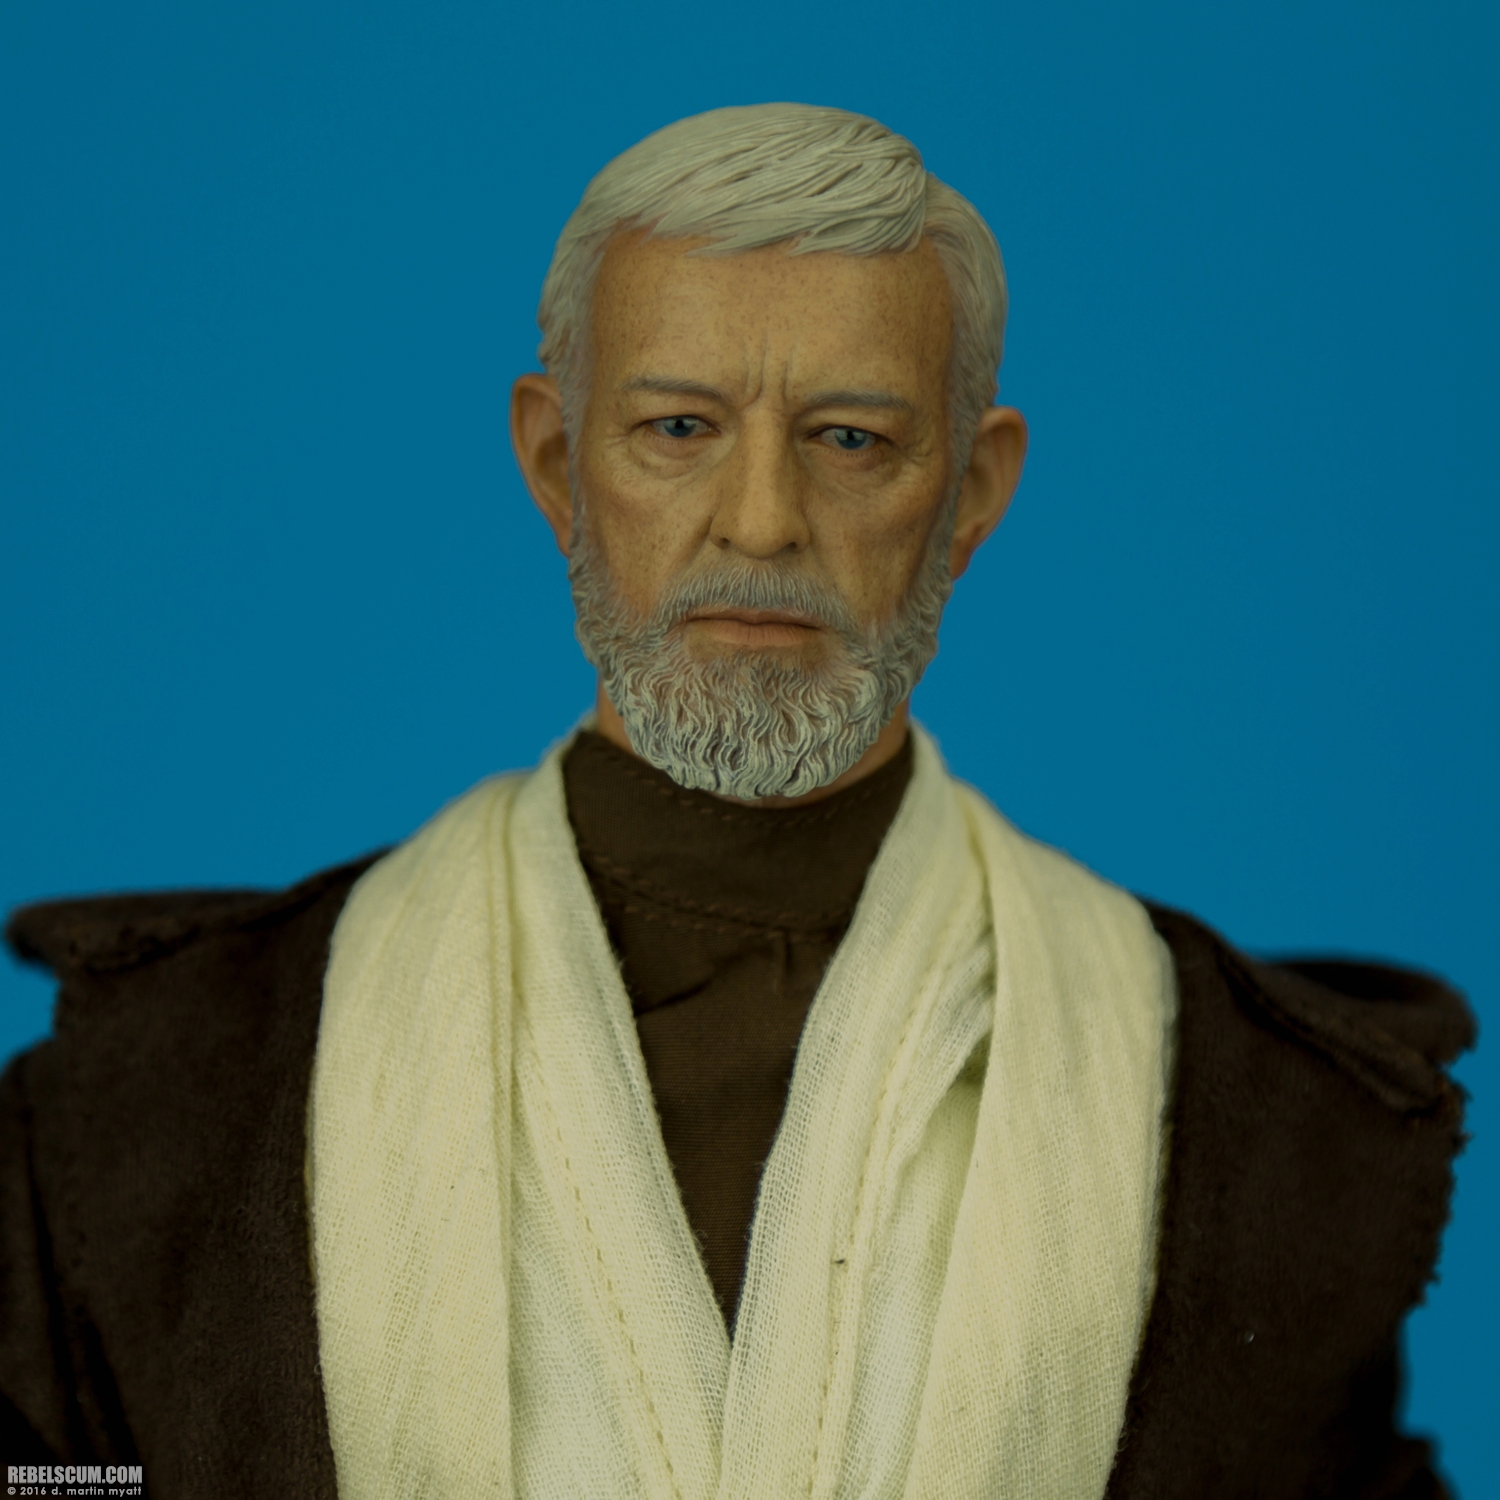 Obi-Wan-Kenobi-MMS283-Star-Wars-Hot-Toys-013.jpg